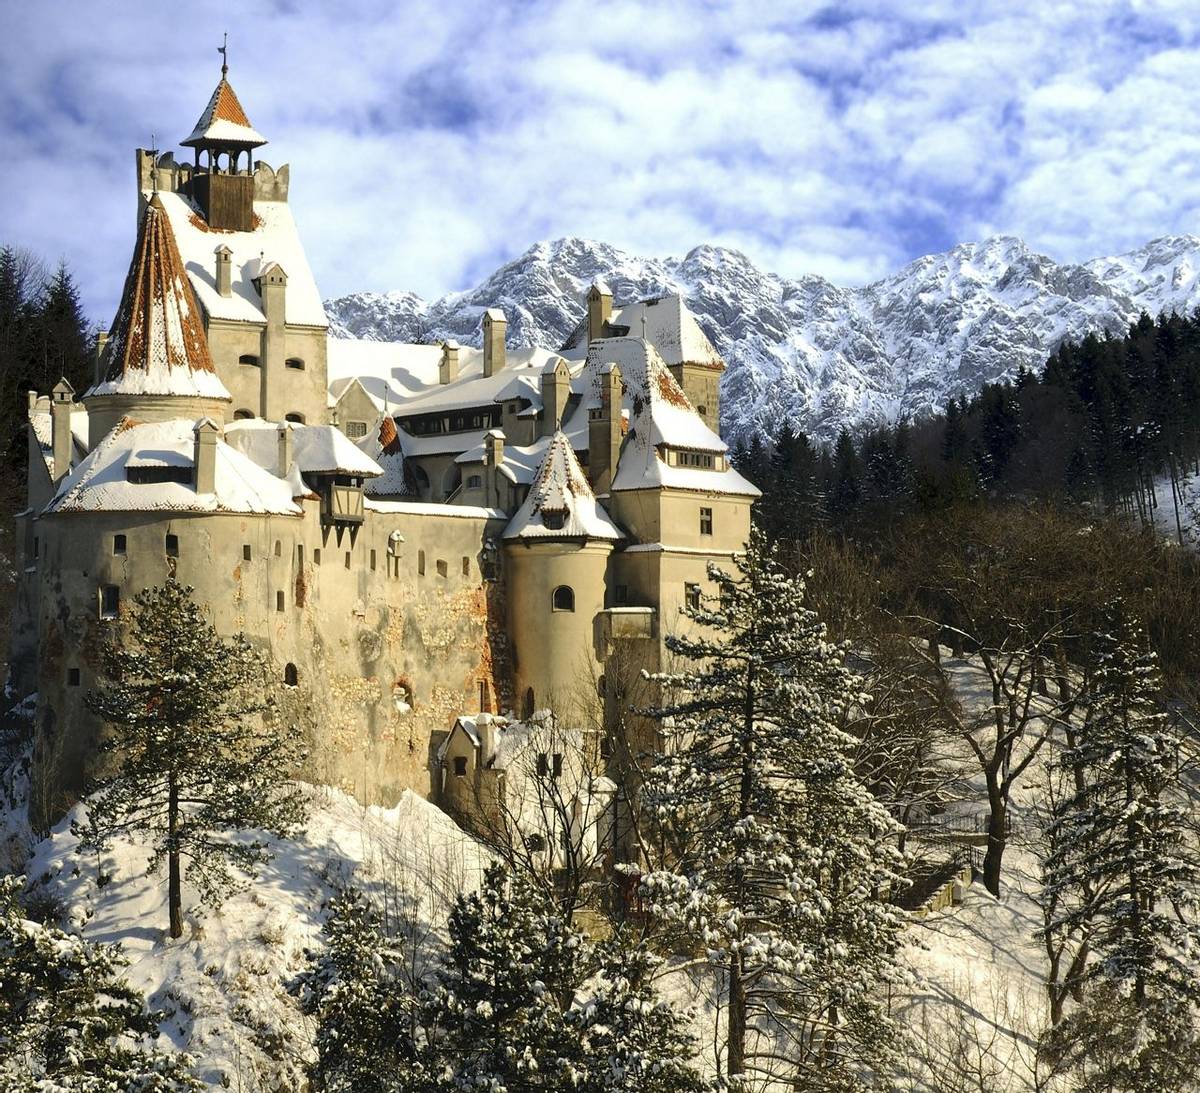 Romania - Bran Castle - Agent Photo.jpg